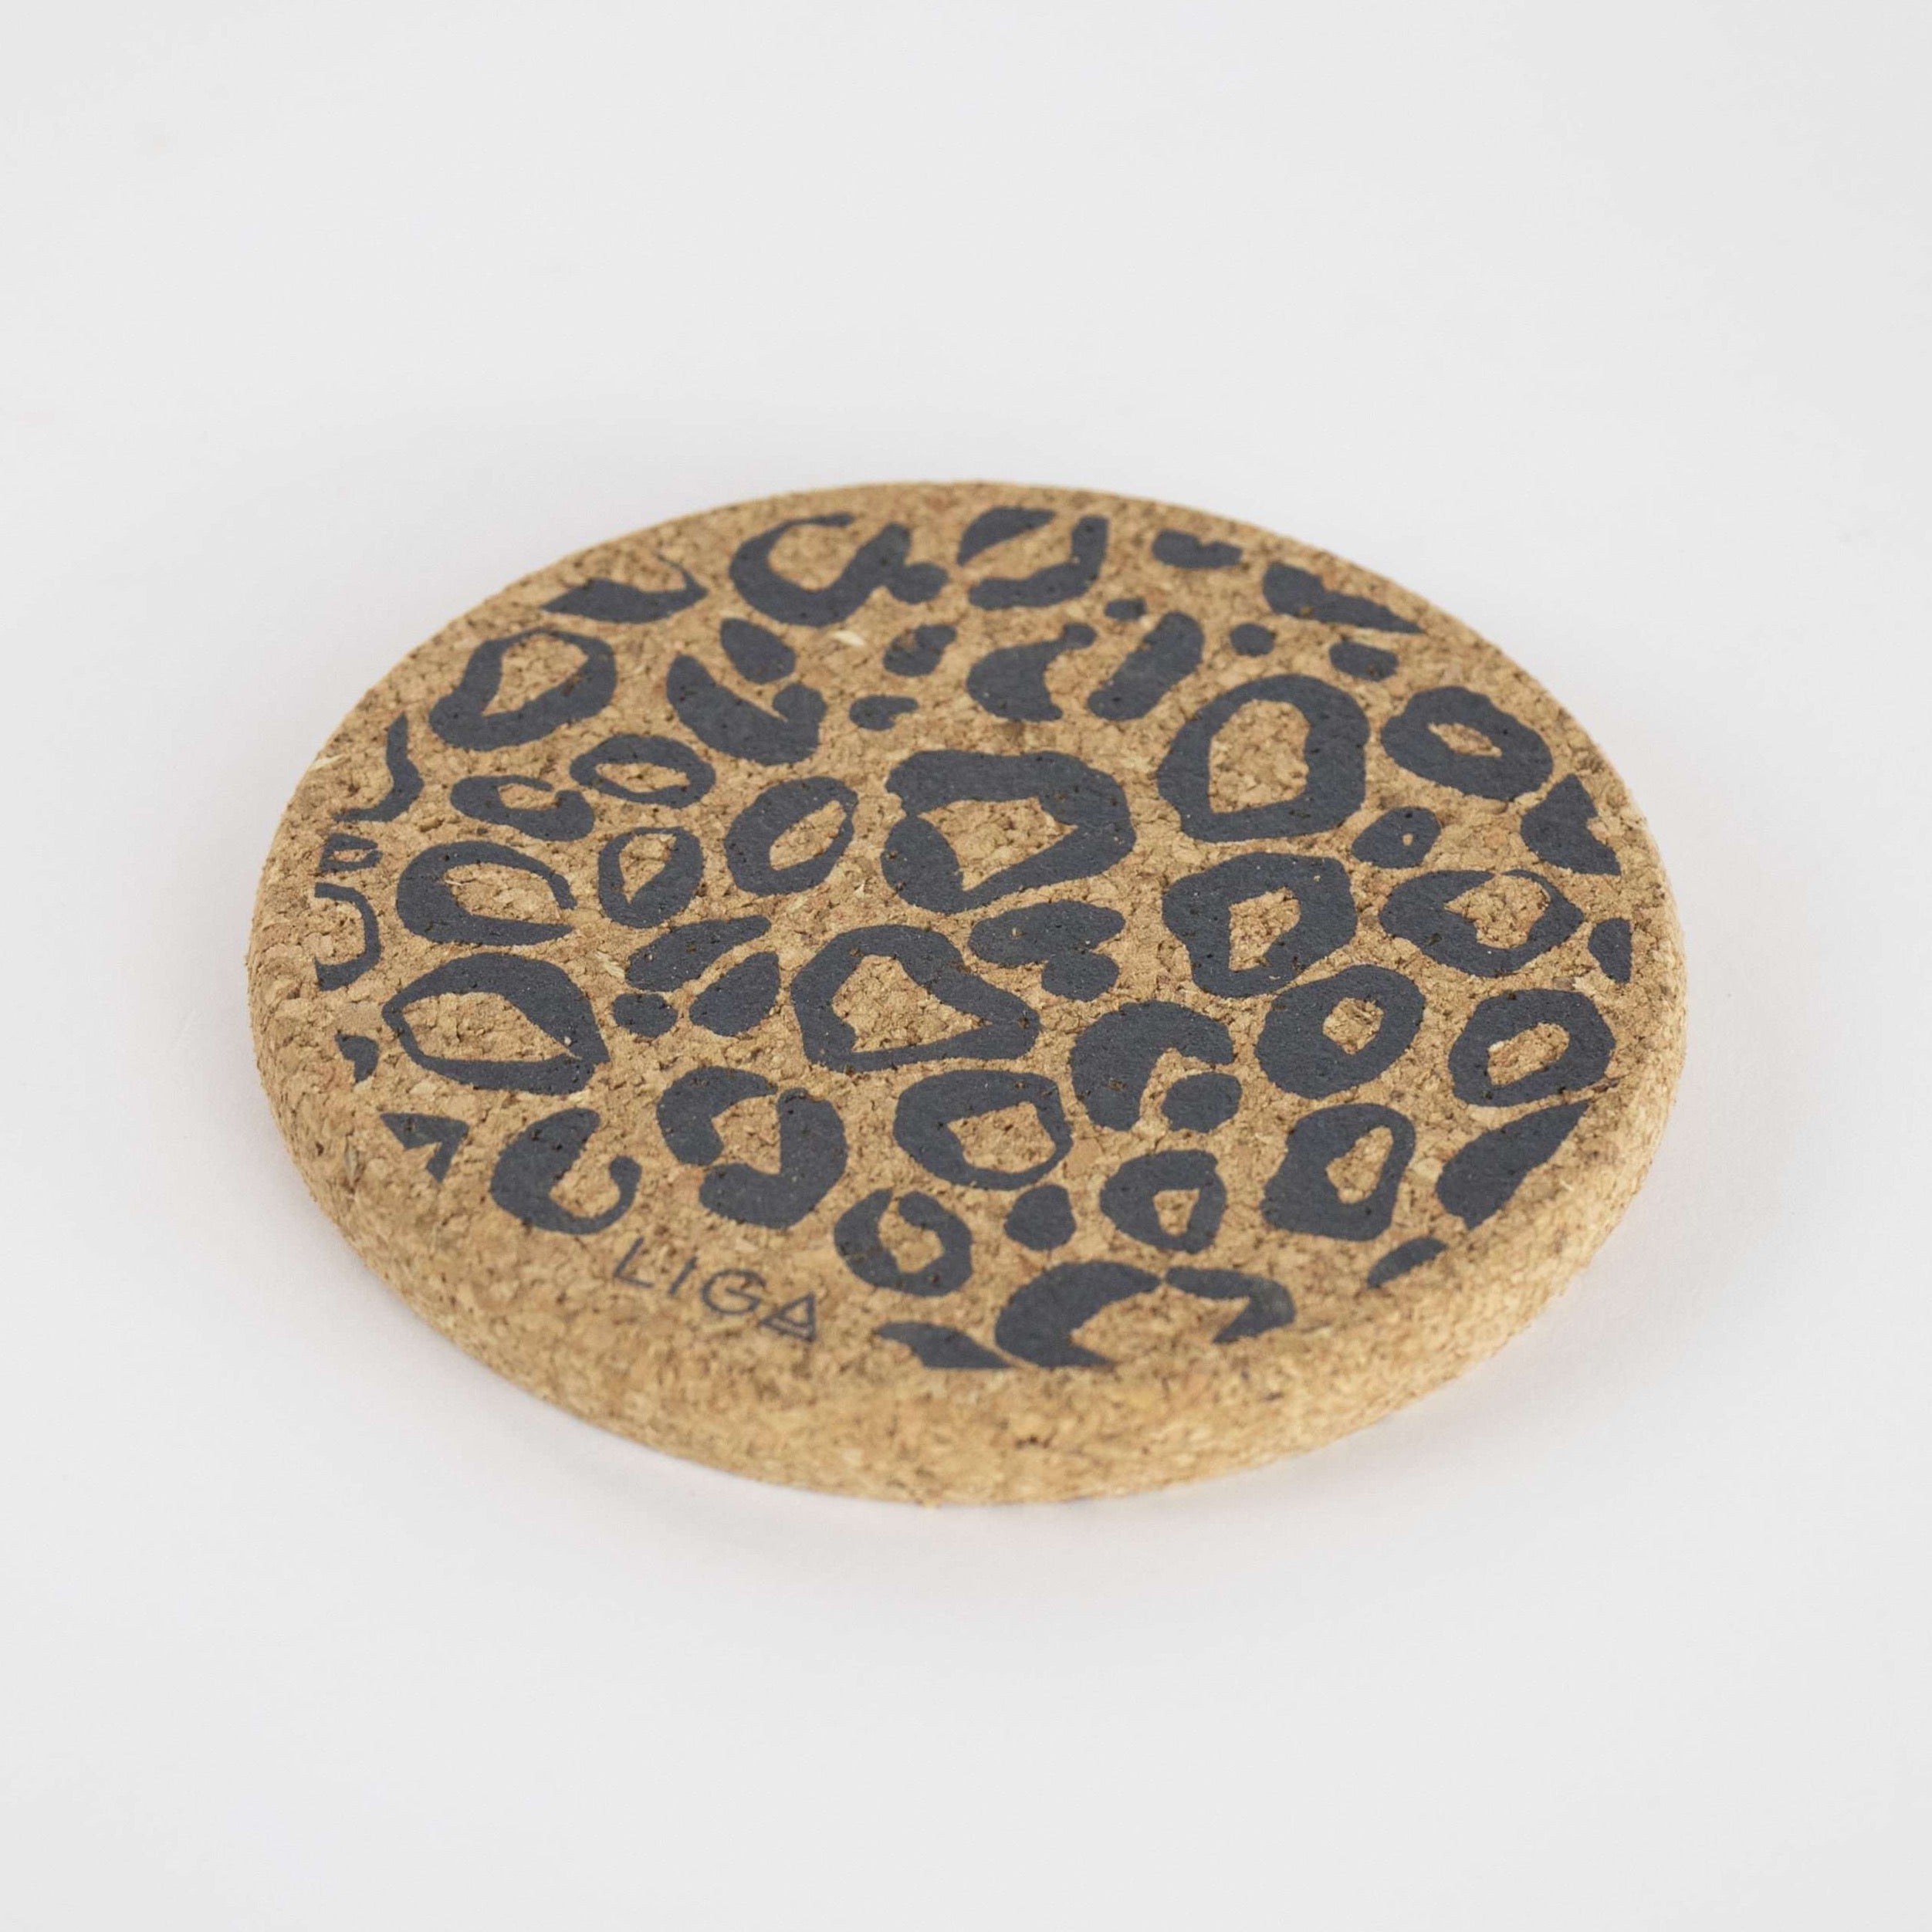 Organic Cork Coaster - Leopard Print - single / set of 4